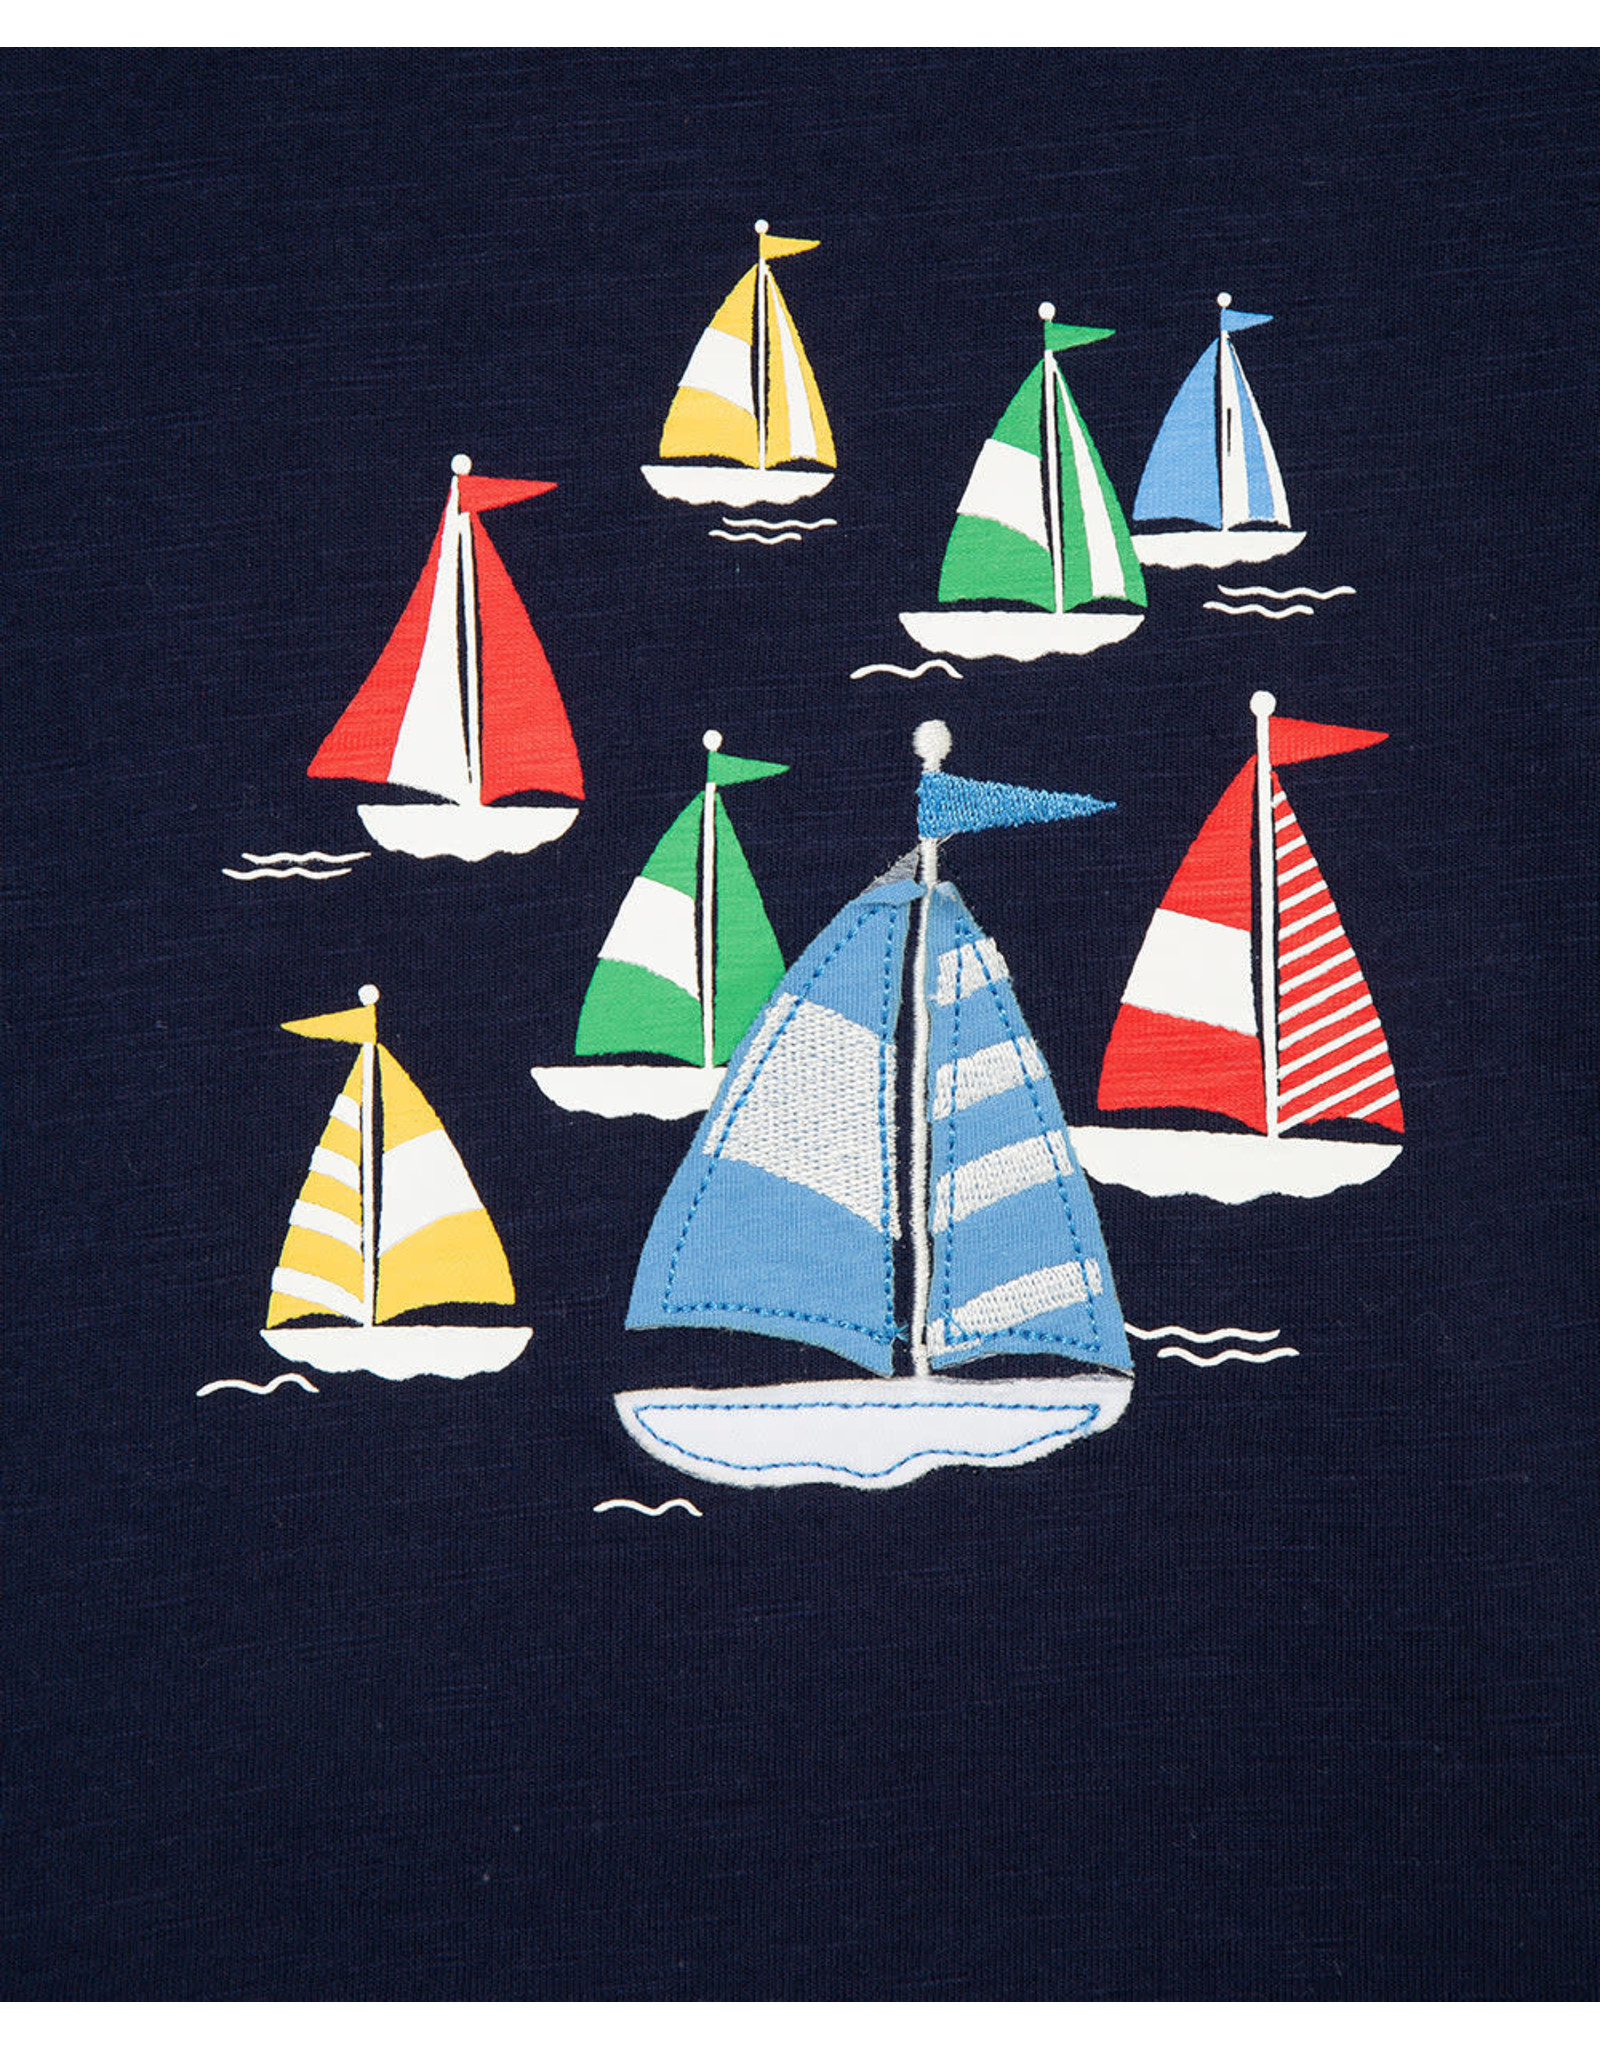 Little Me Sailboats T-Shirts and Shorts 3 Piece Set